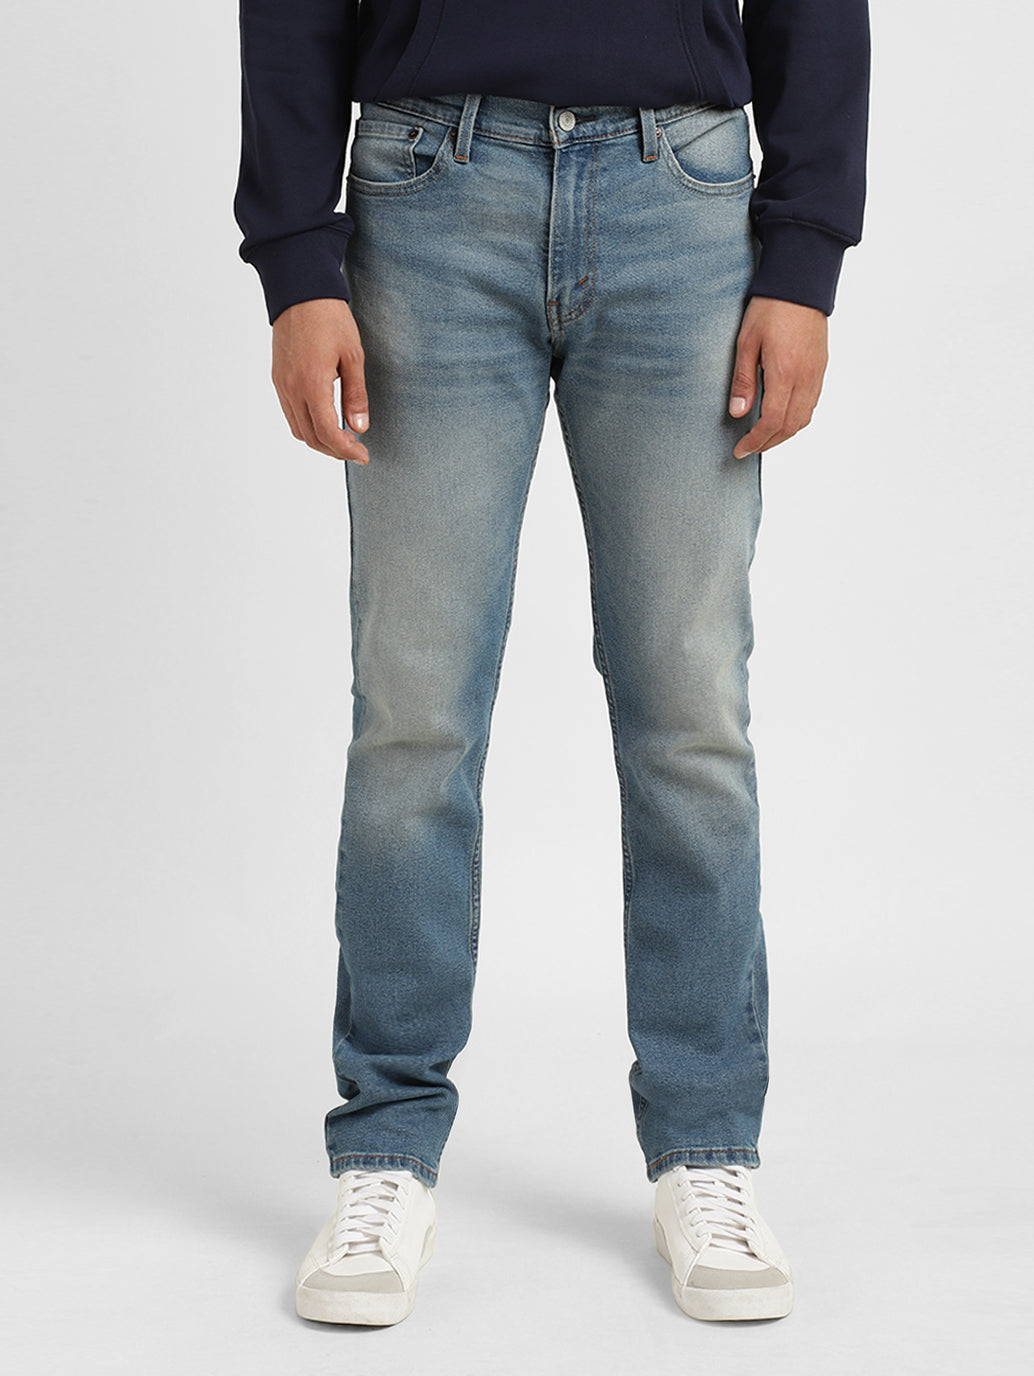 Men's 511 Light Indigo Slim Fit Jeans